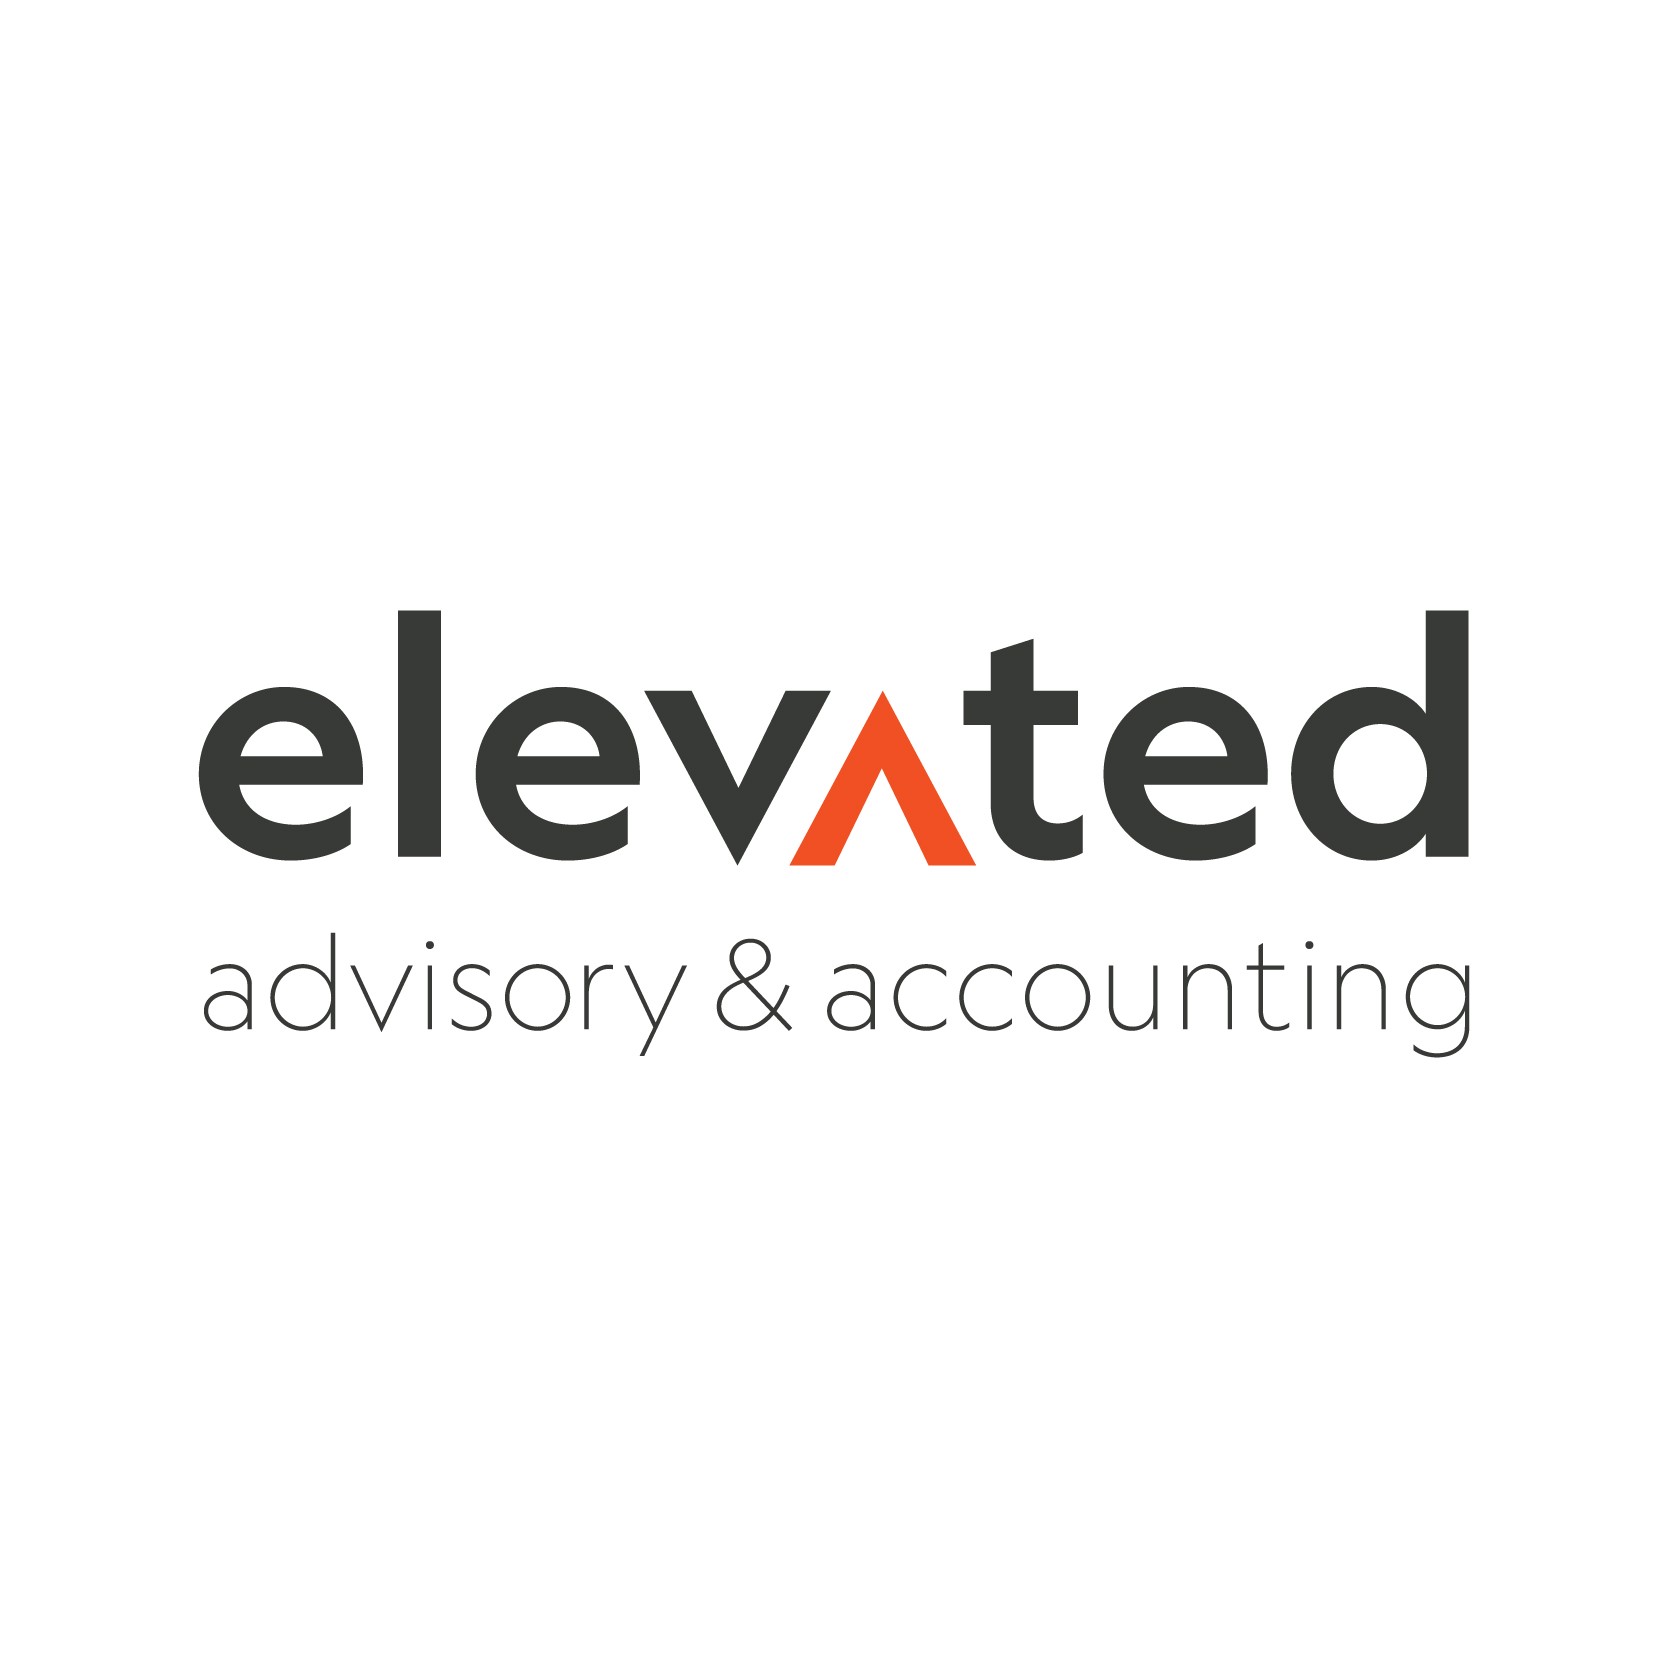 Elevated Advisory & Accounting